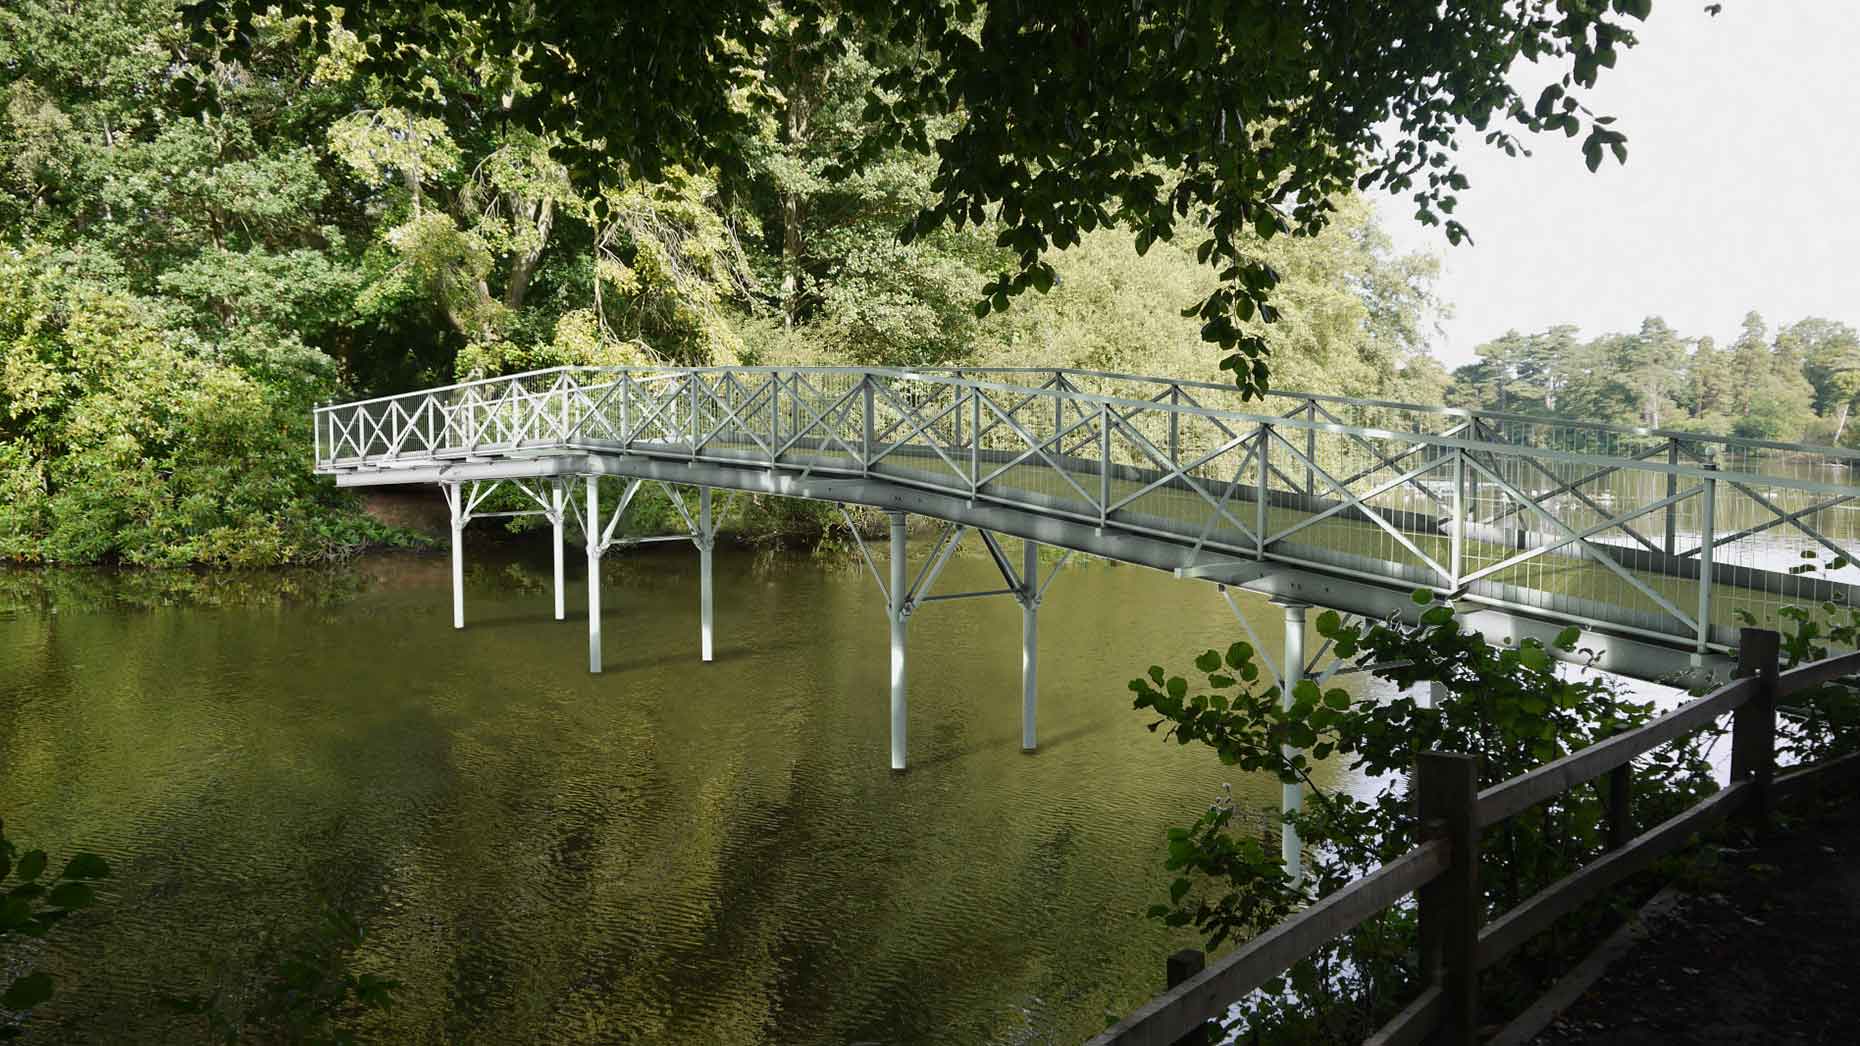 Designs of the new White Bridge at Hartsholme Park in Lincoln